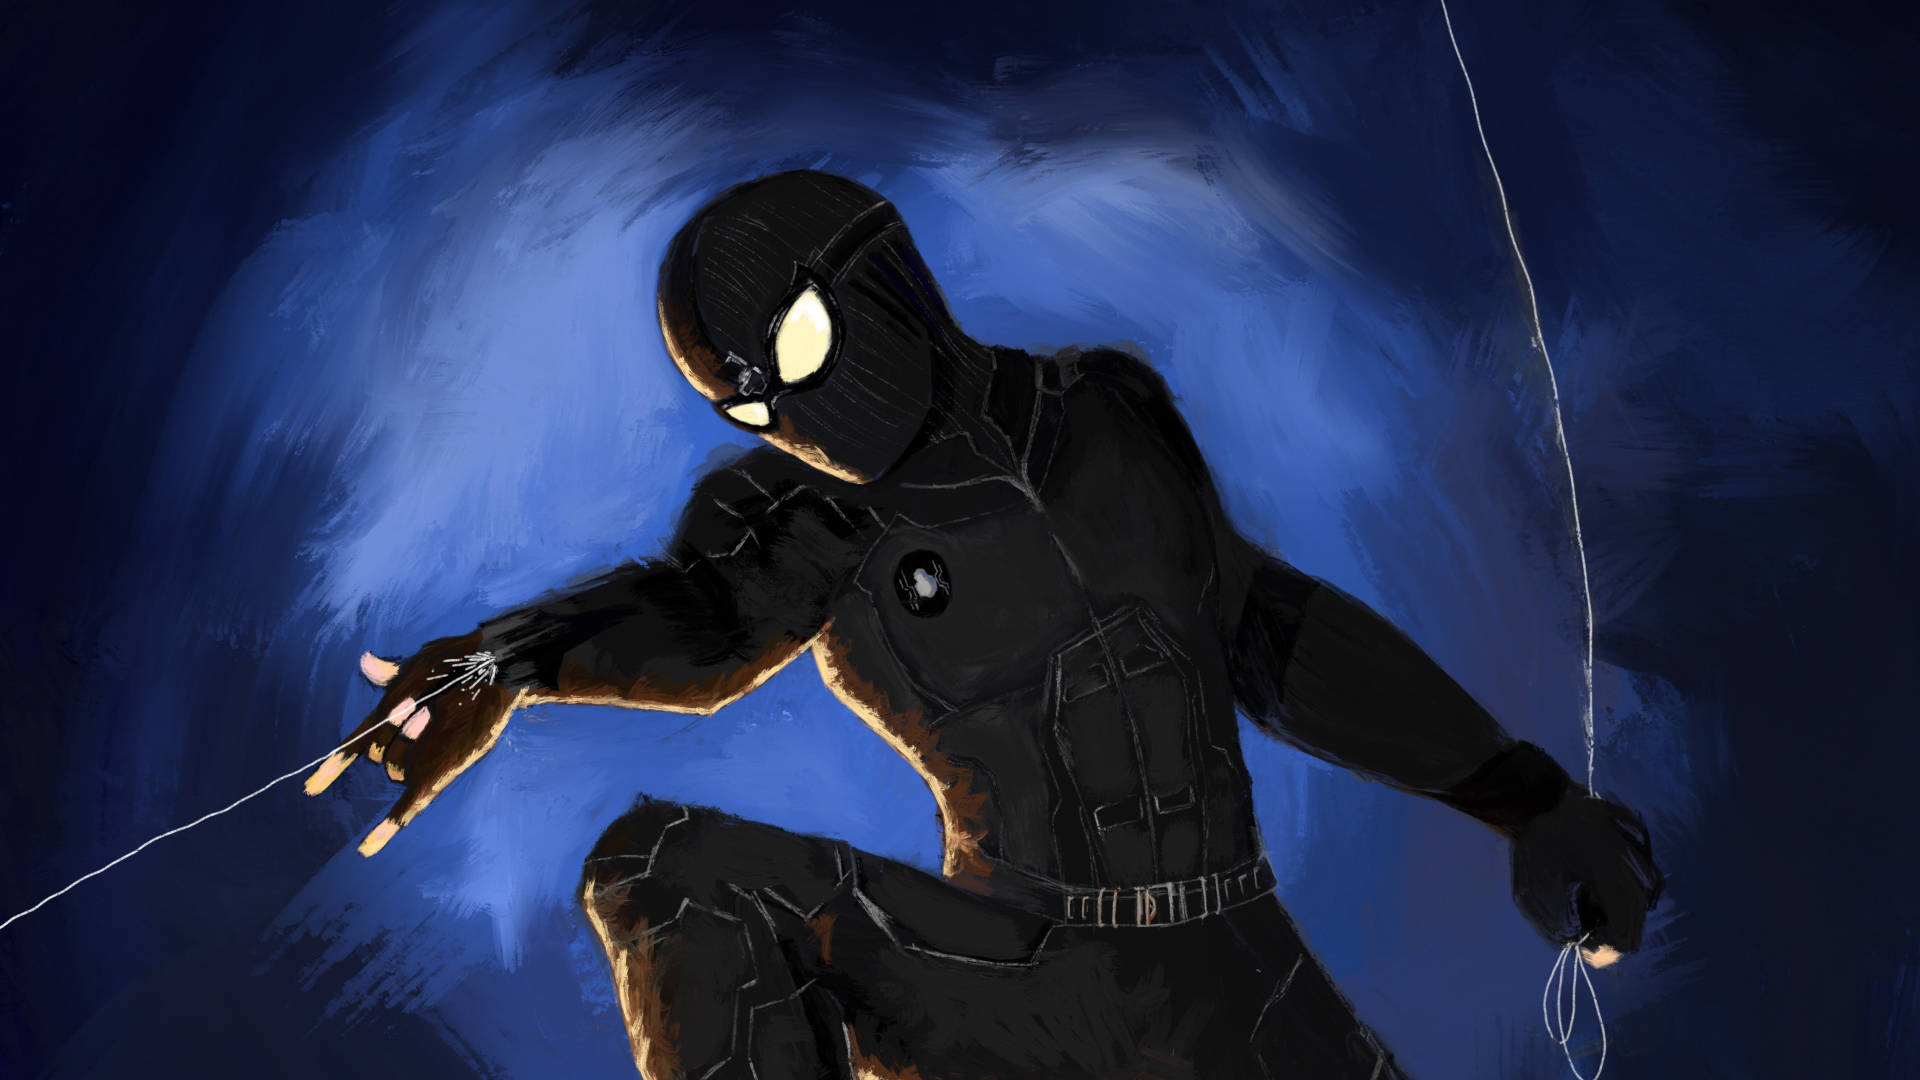 Black Spiderman Painting Wallpaper